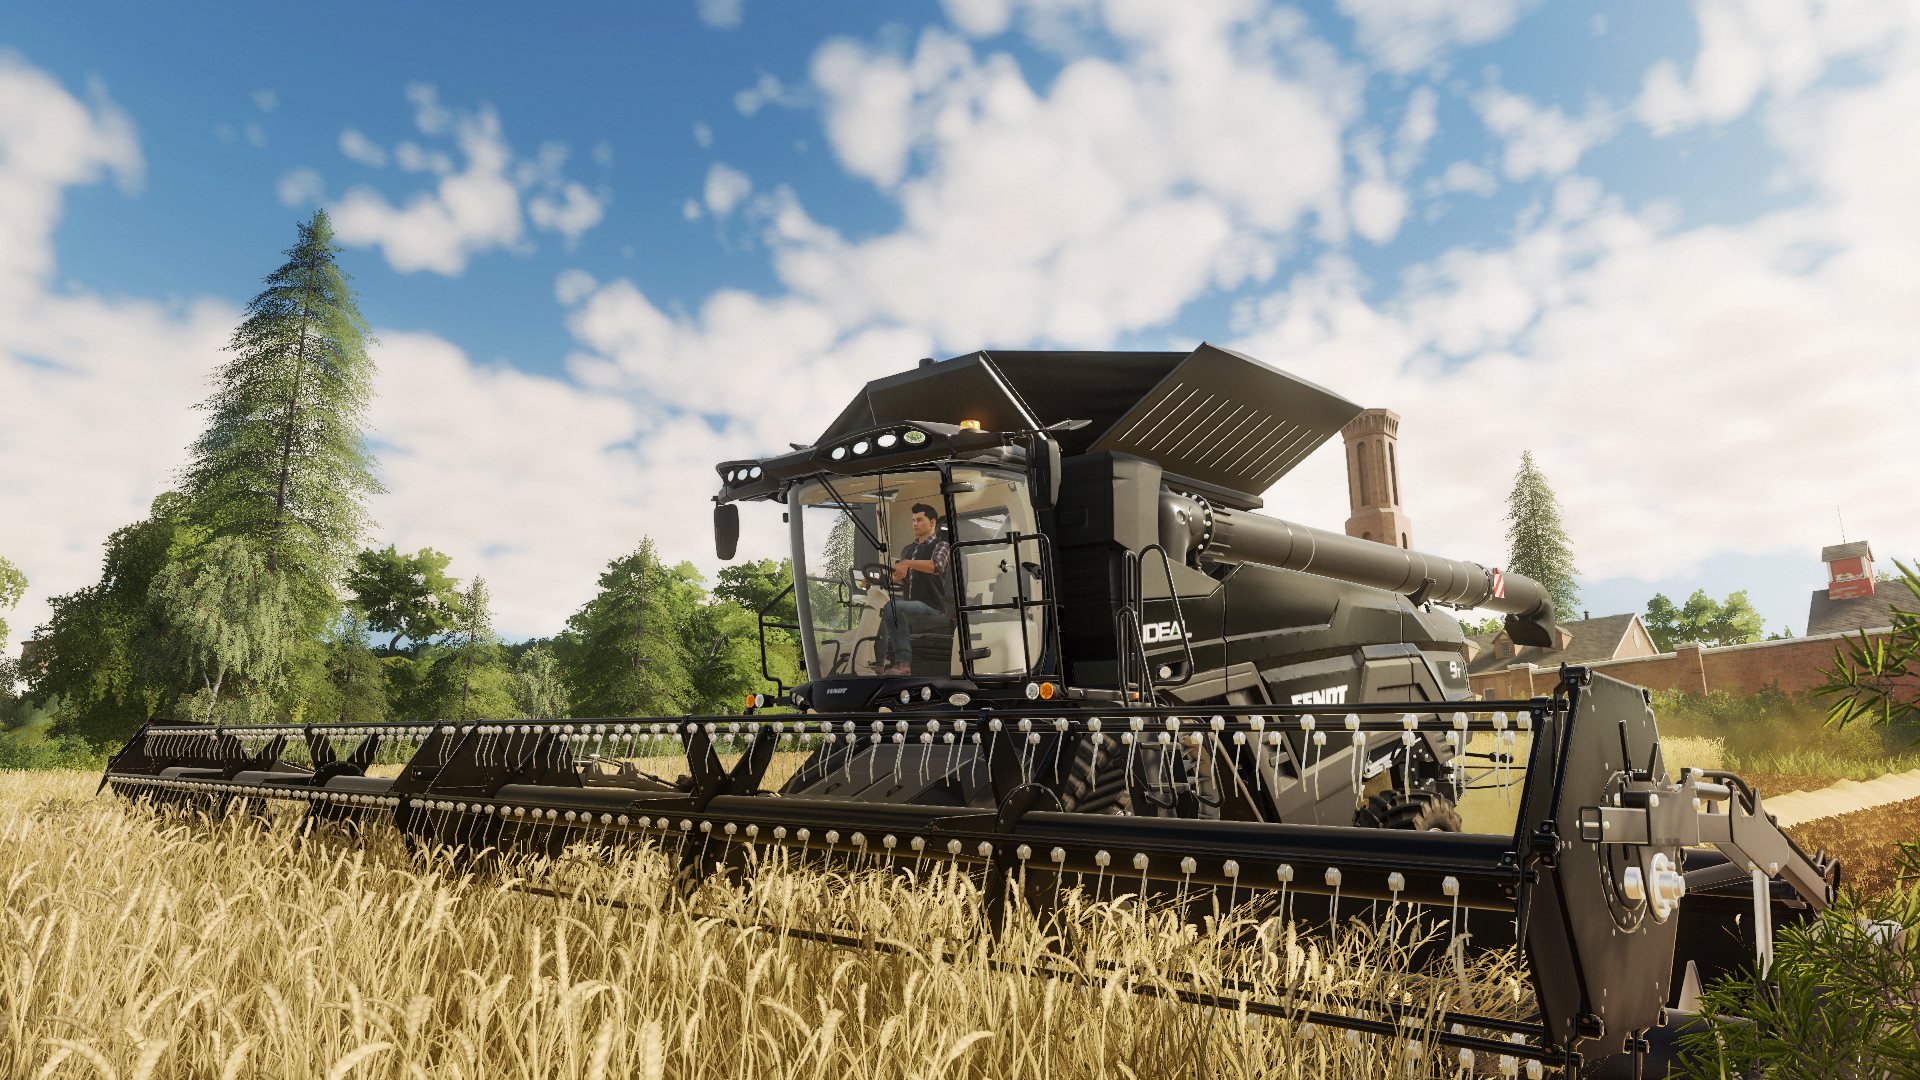 Farming Simulator 19 - Season Pass EU Steam Altergift